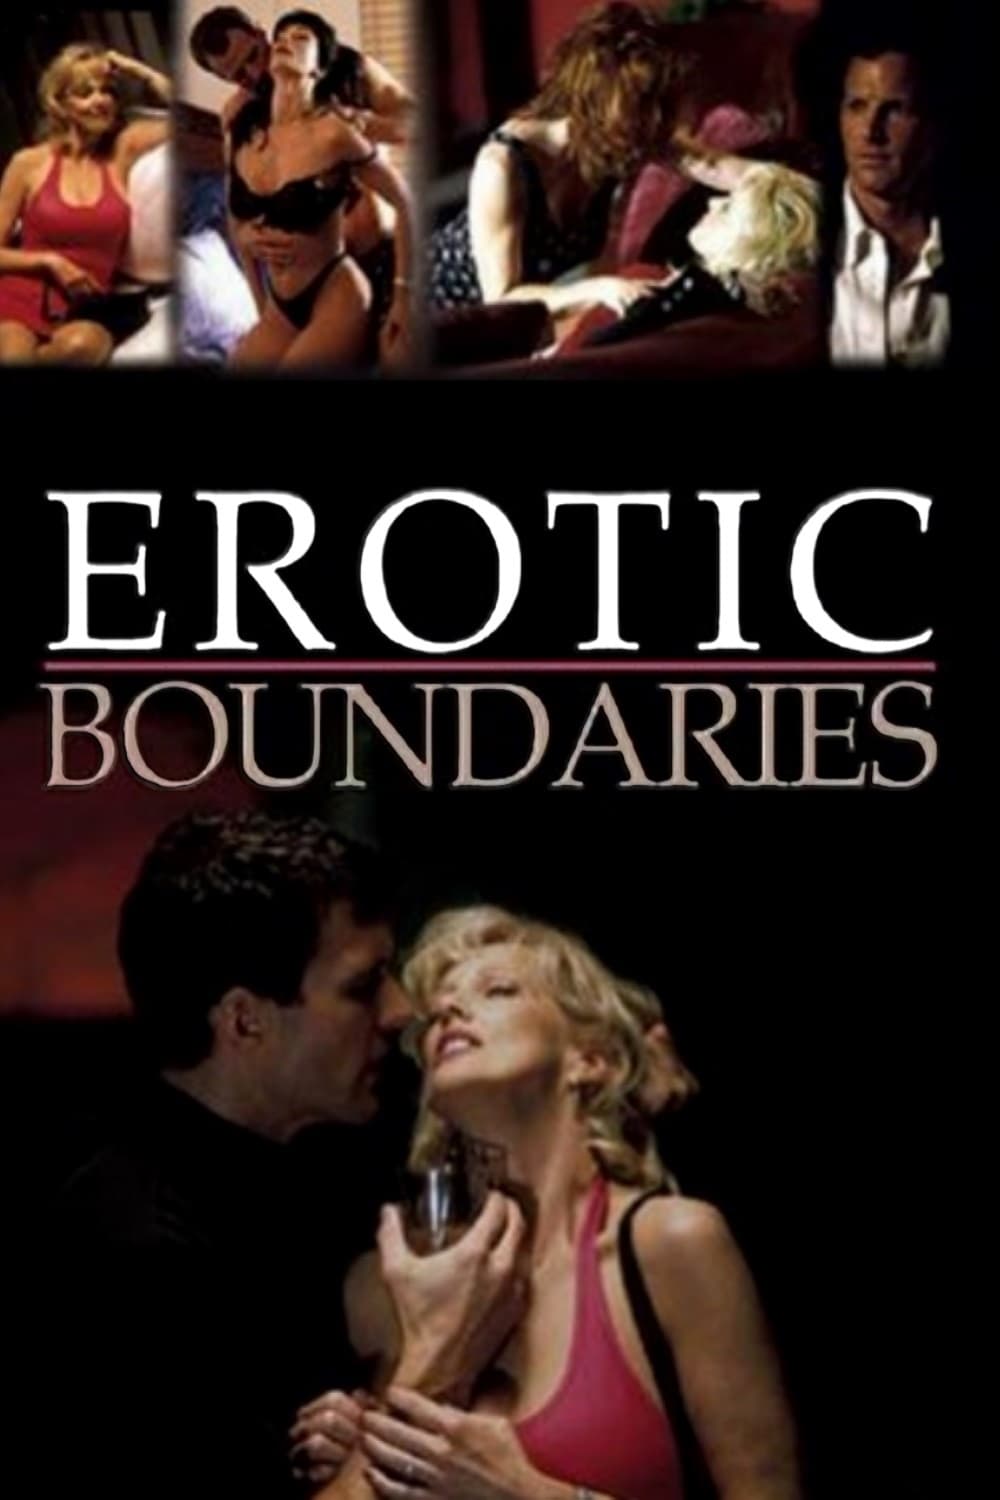 Erotic movies database full